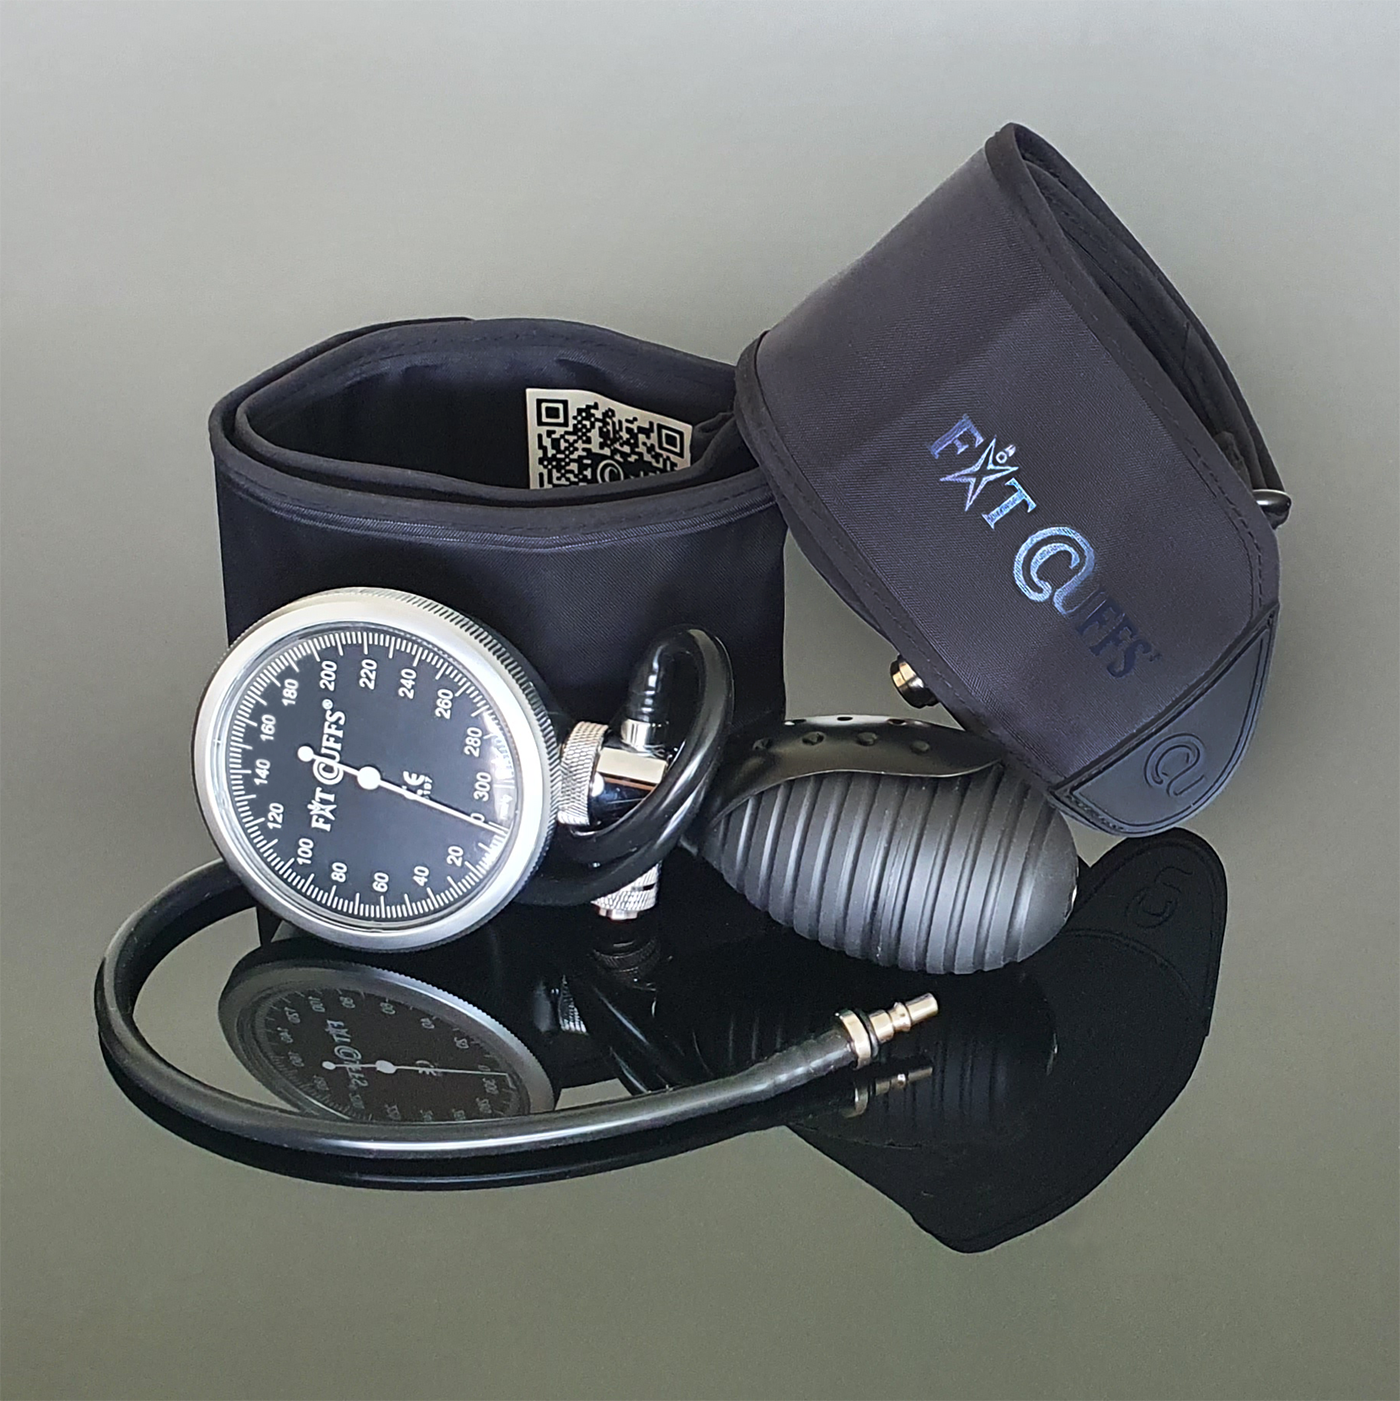 Se Fit Cuffs - Performance Upper V3.1 - Standard - Black hos Fitcuffs.com